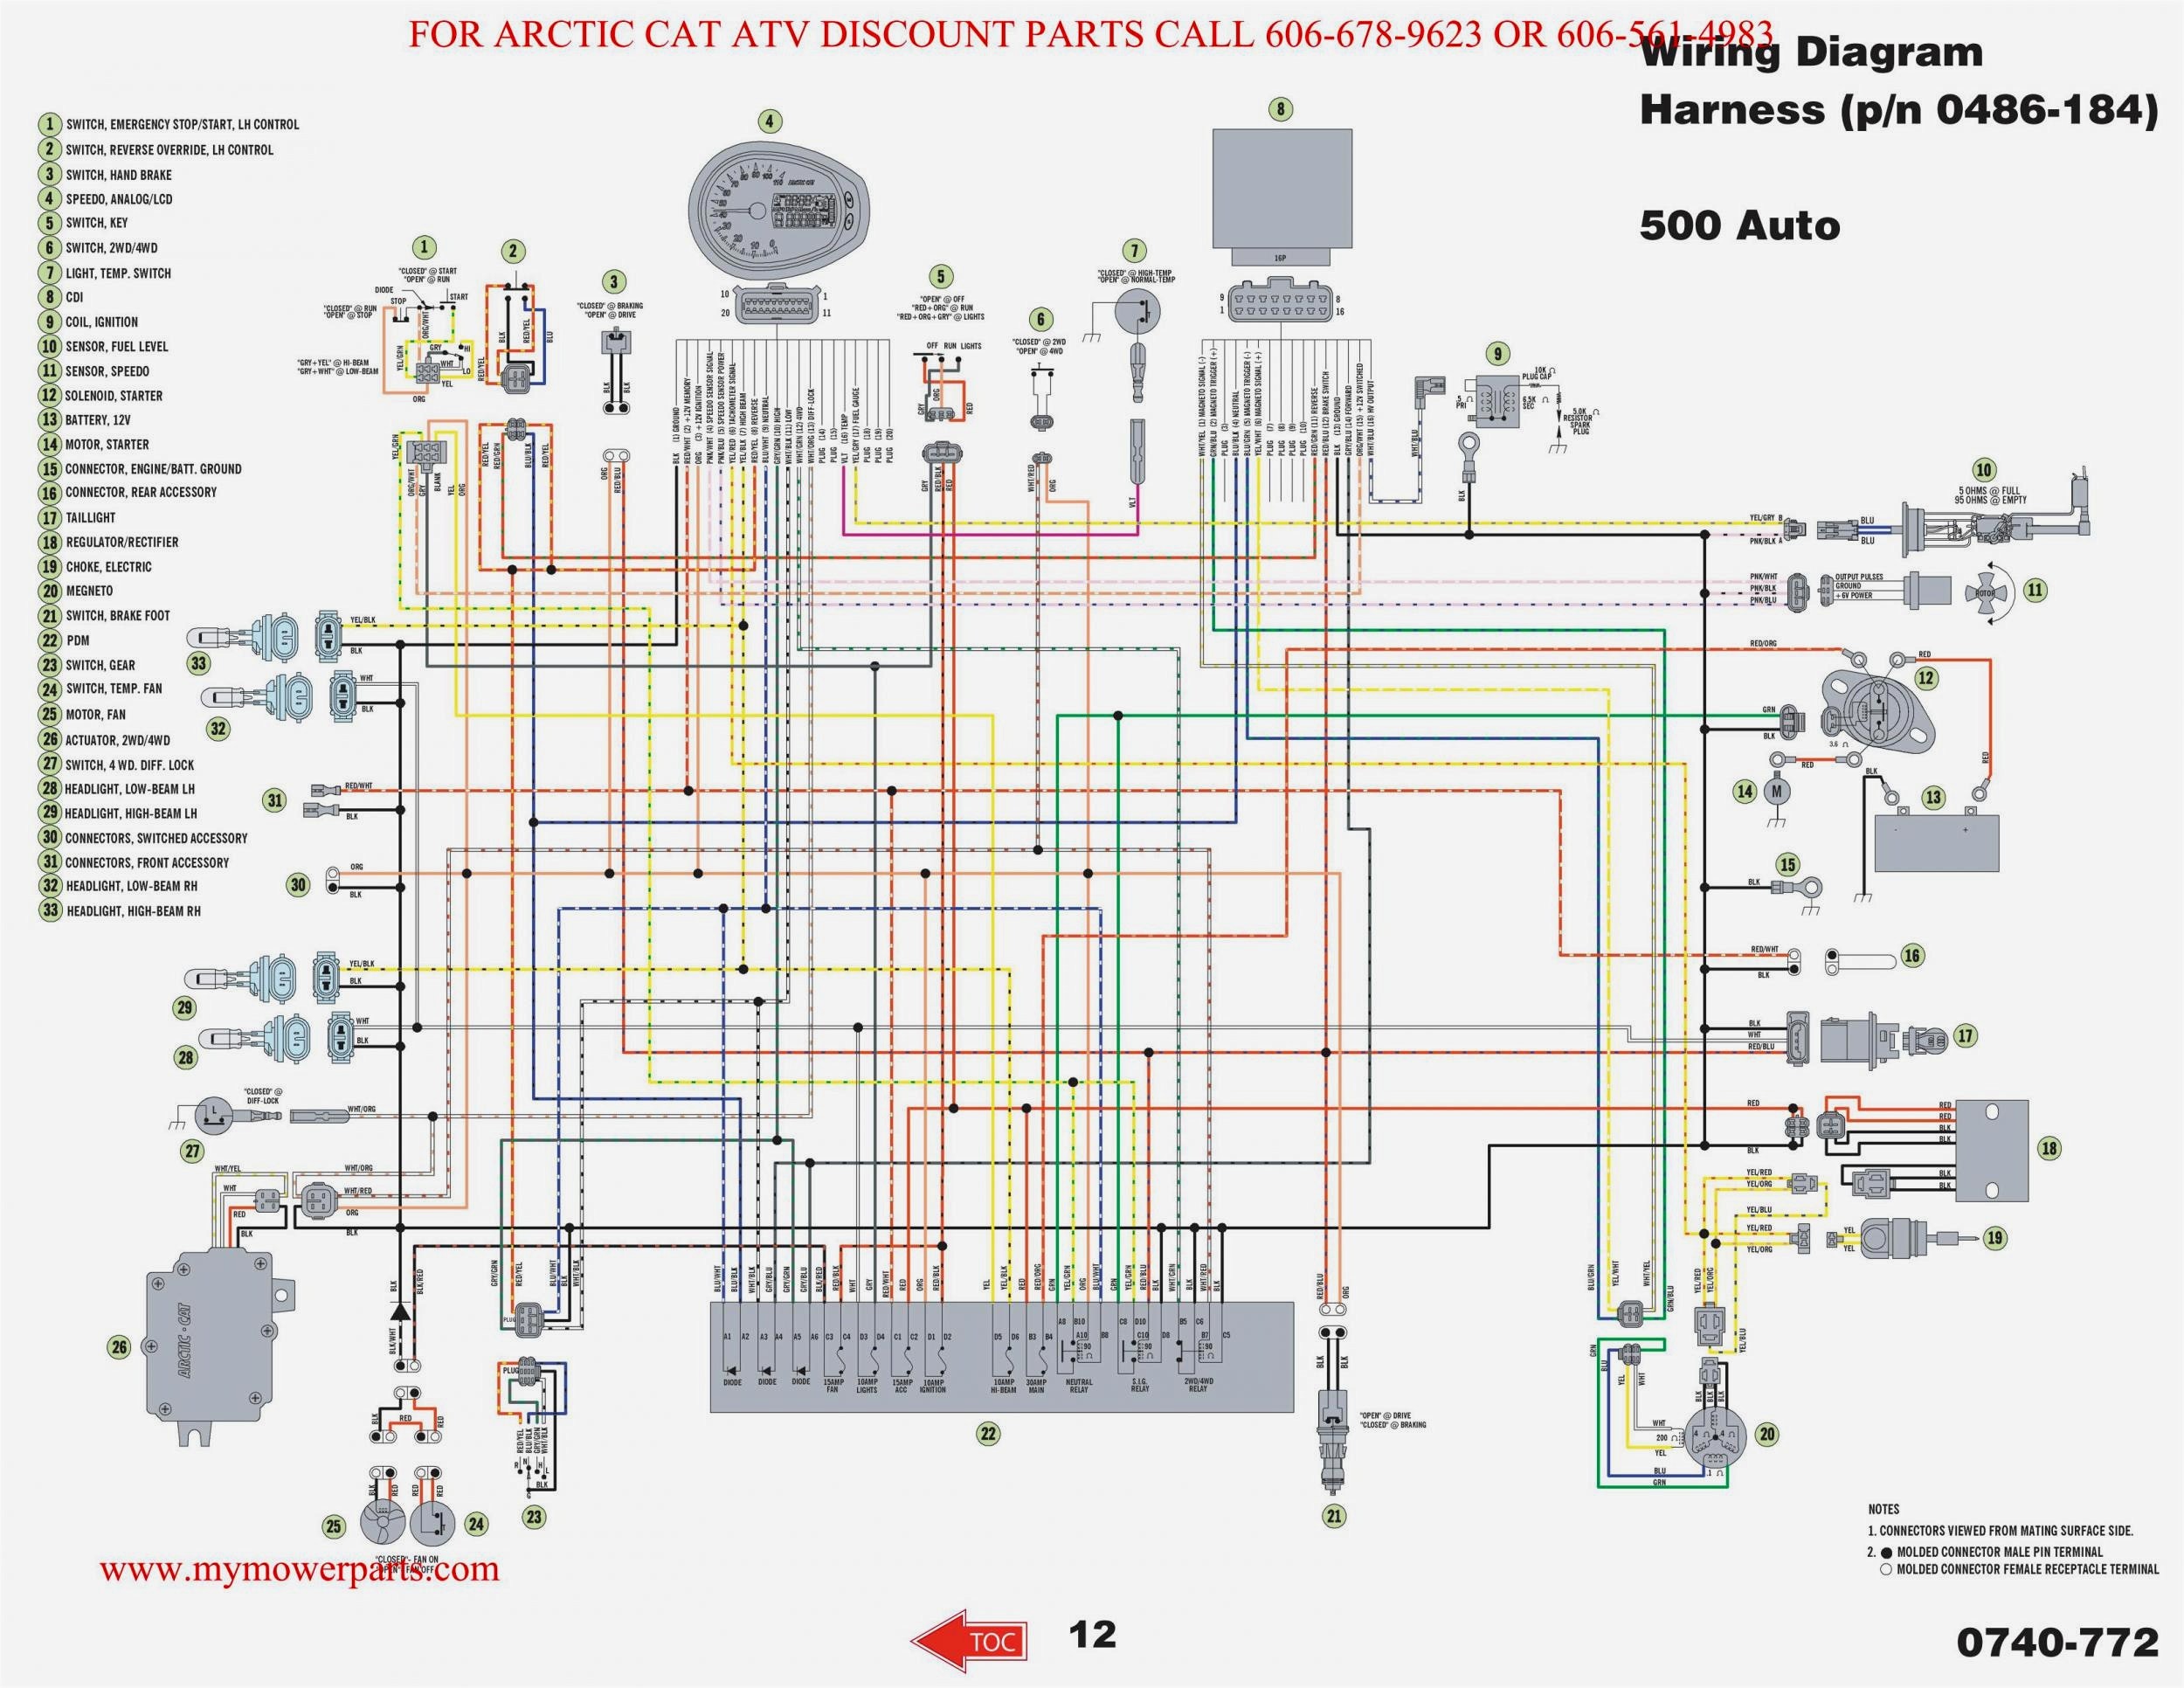 2004 Yfz 450 Wiring Diagram - Wiring Diagram